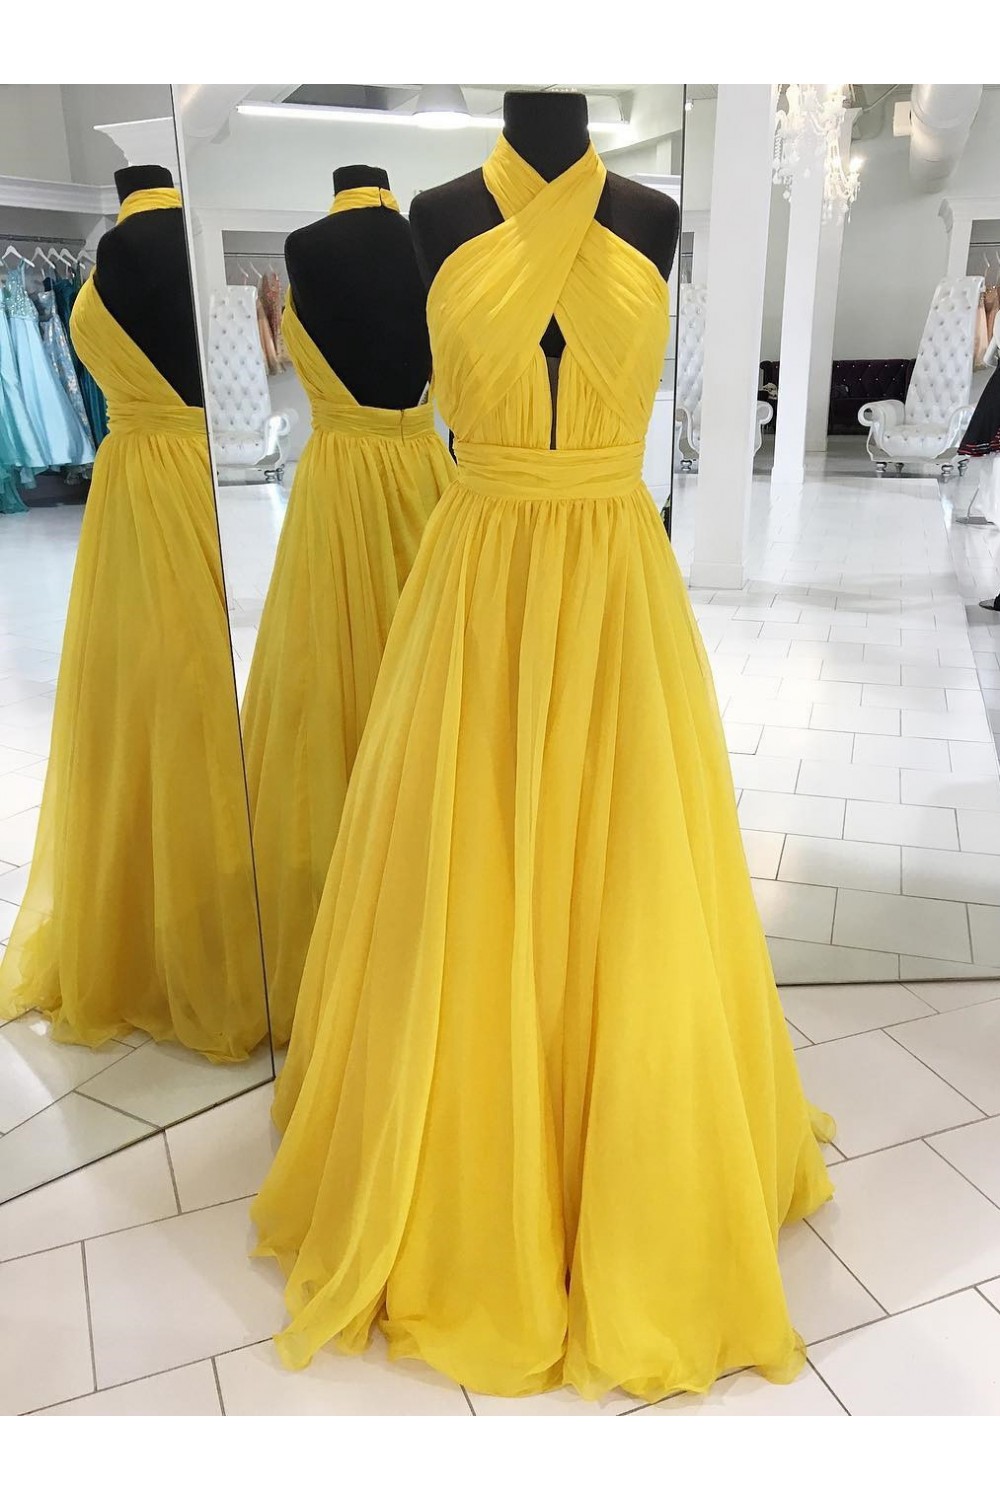 Long Yellow Halter Chiffon Prom Dresses Formal Evening Dresses 601056